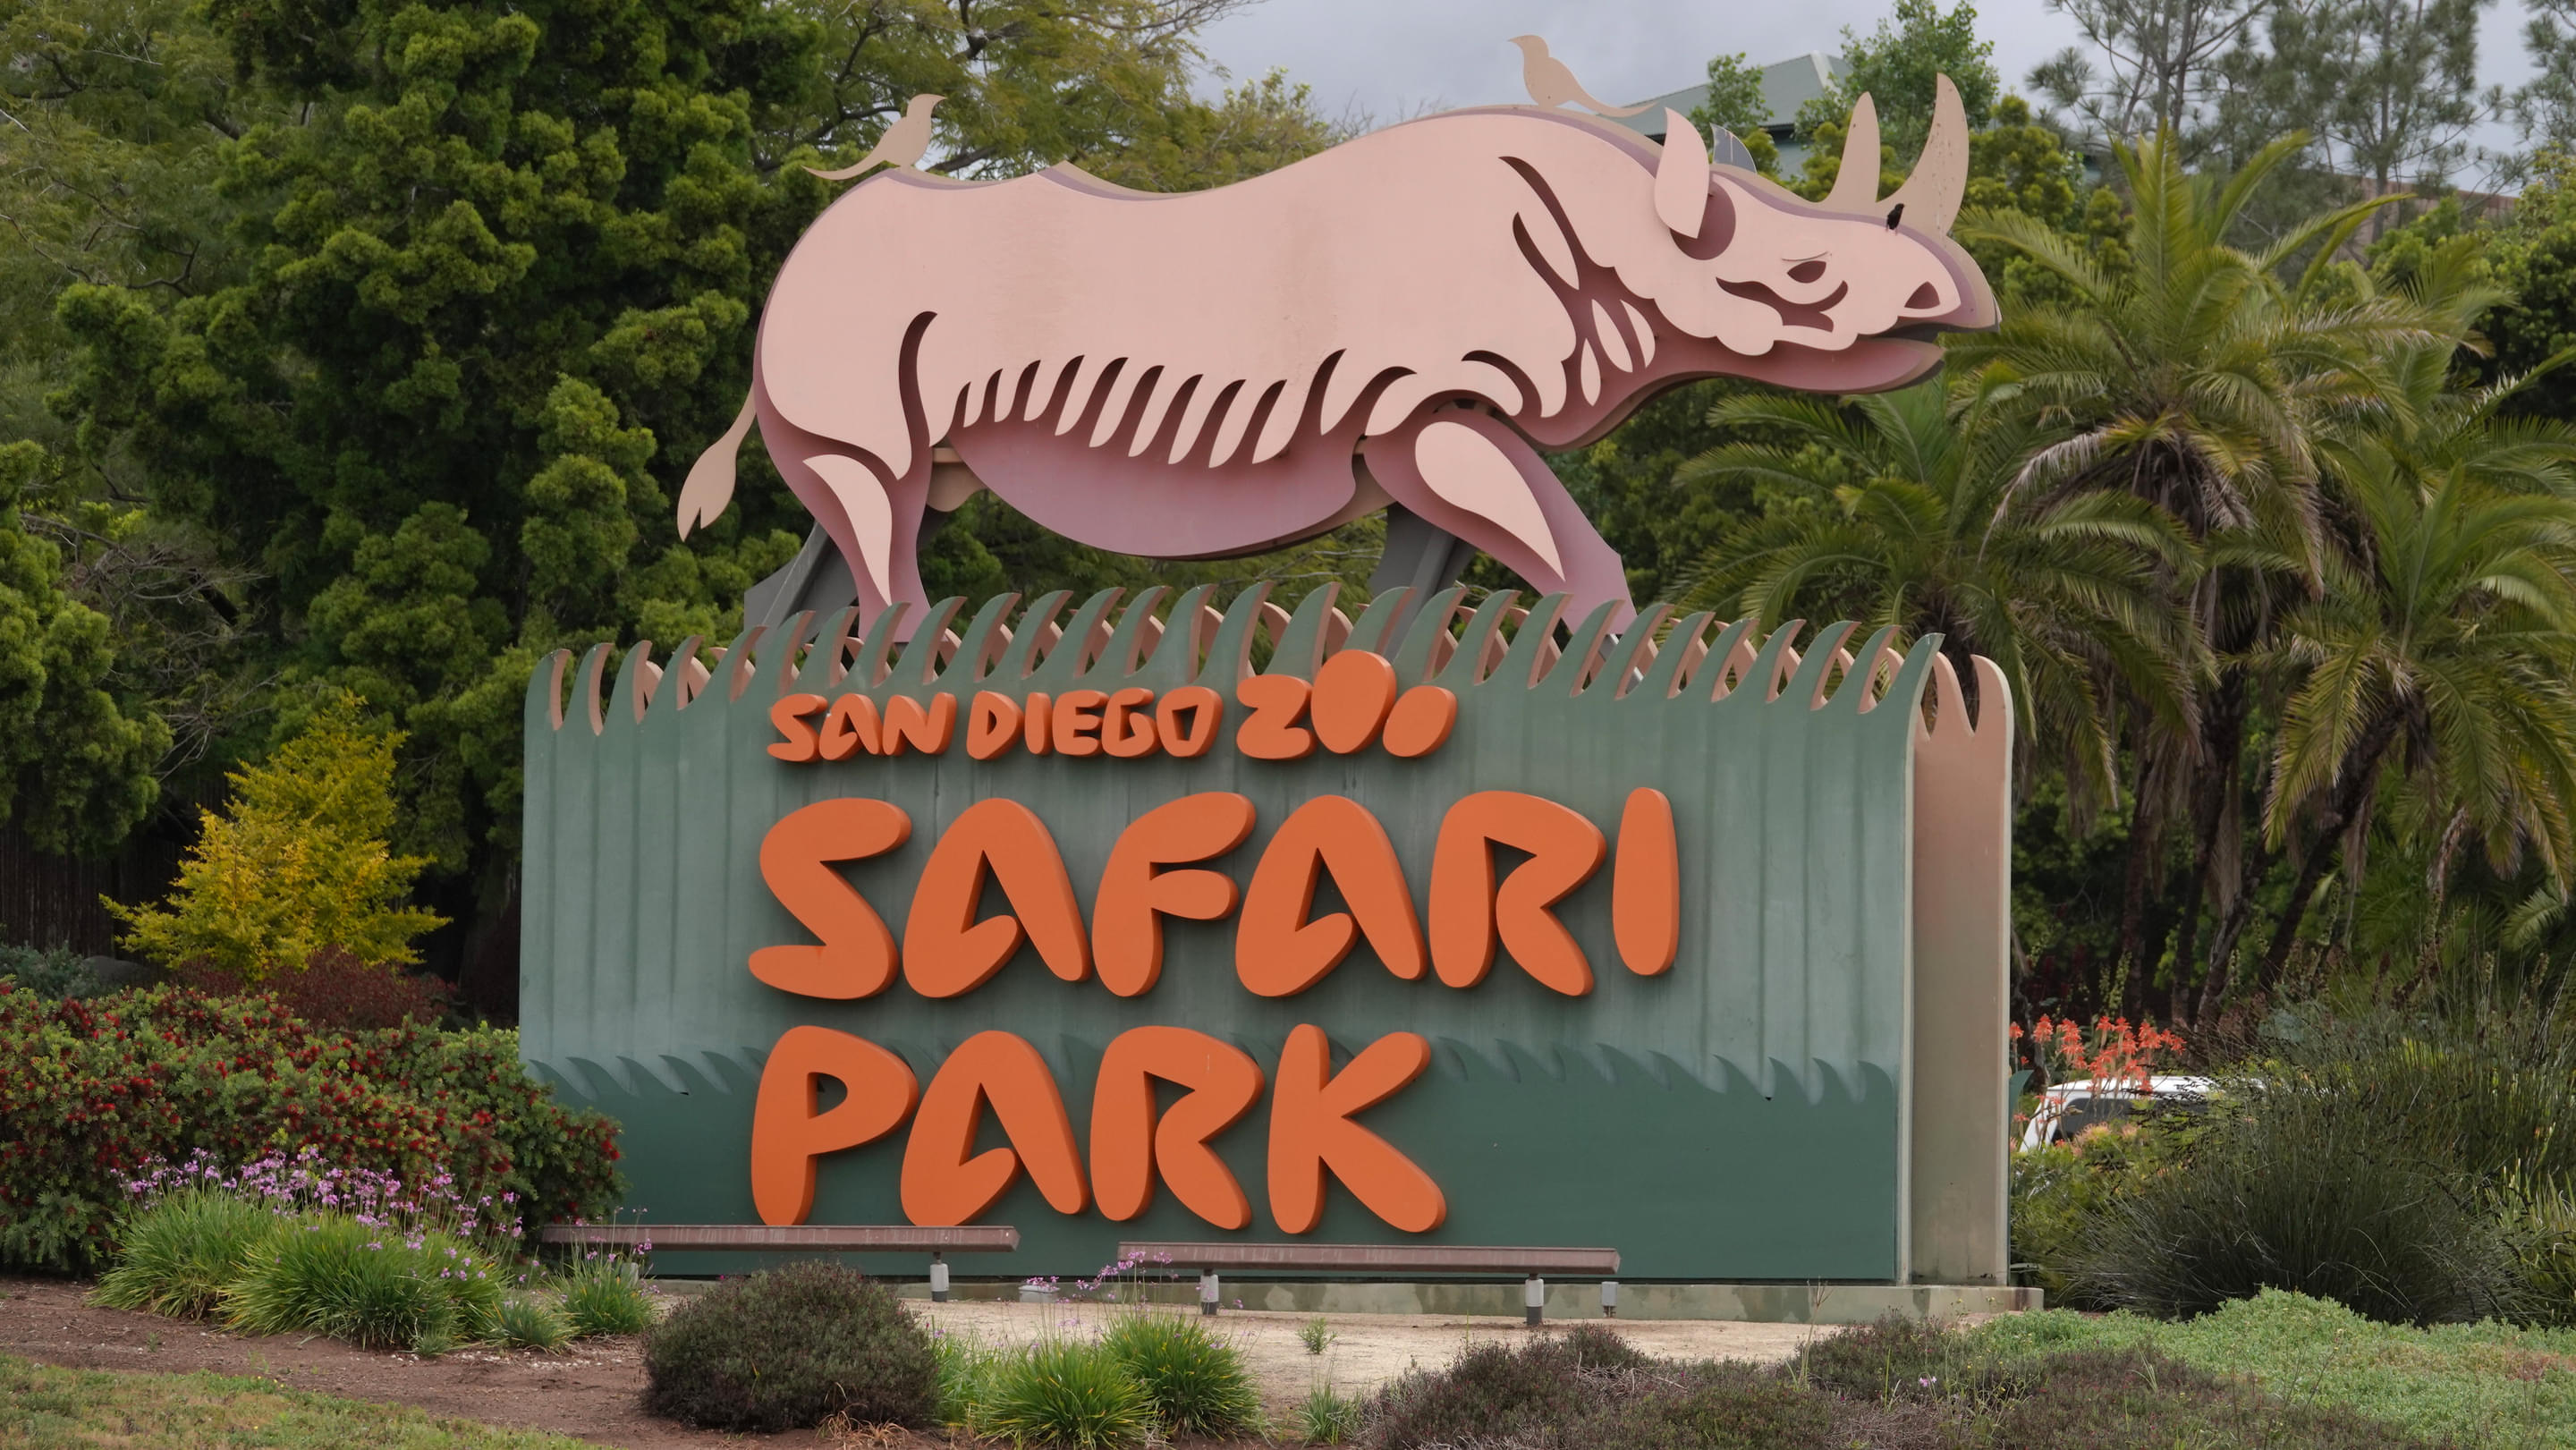 San Diego Zoo Safari Park Overview